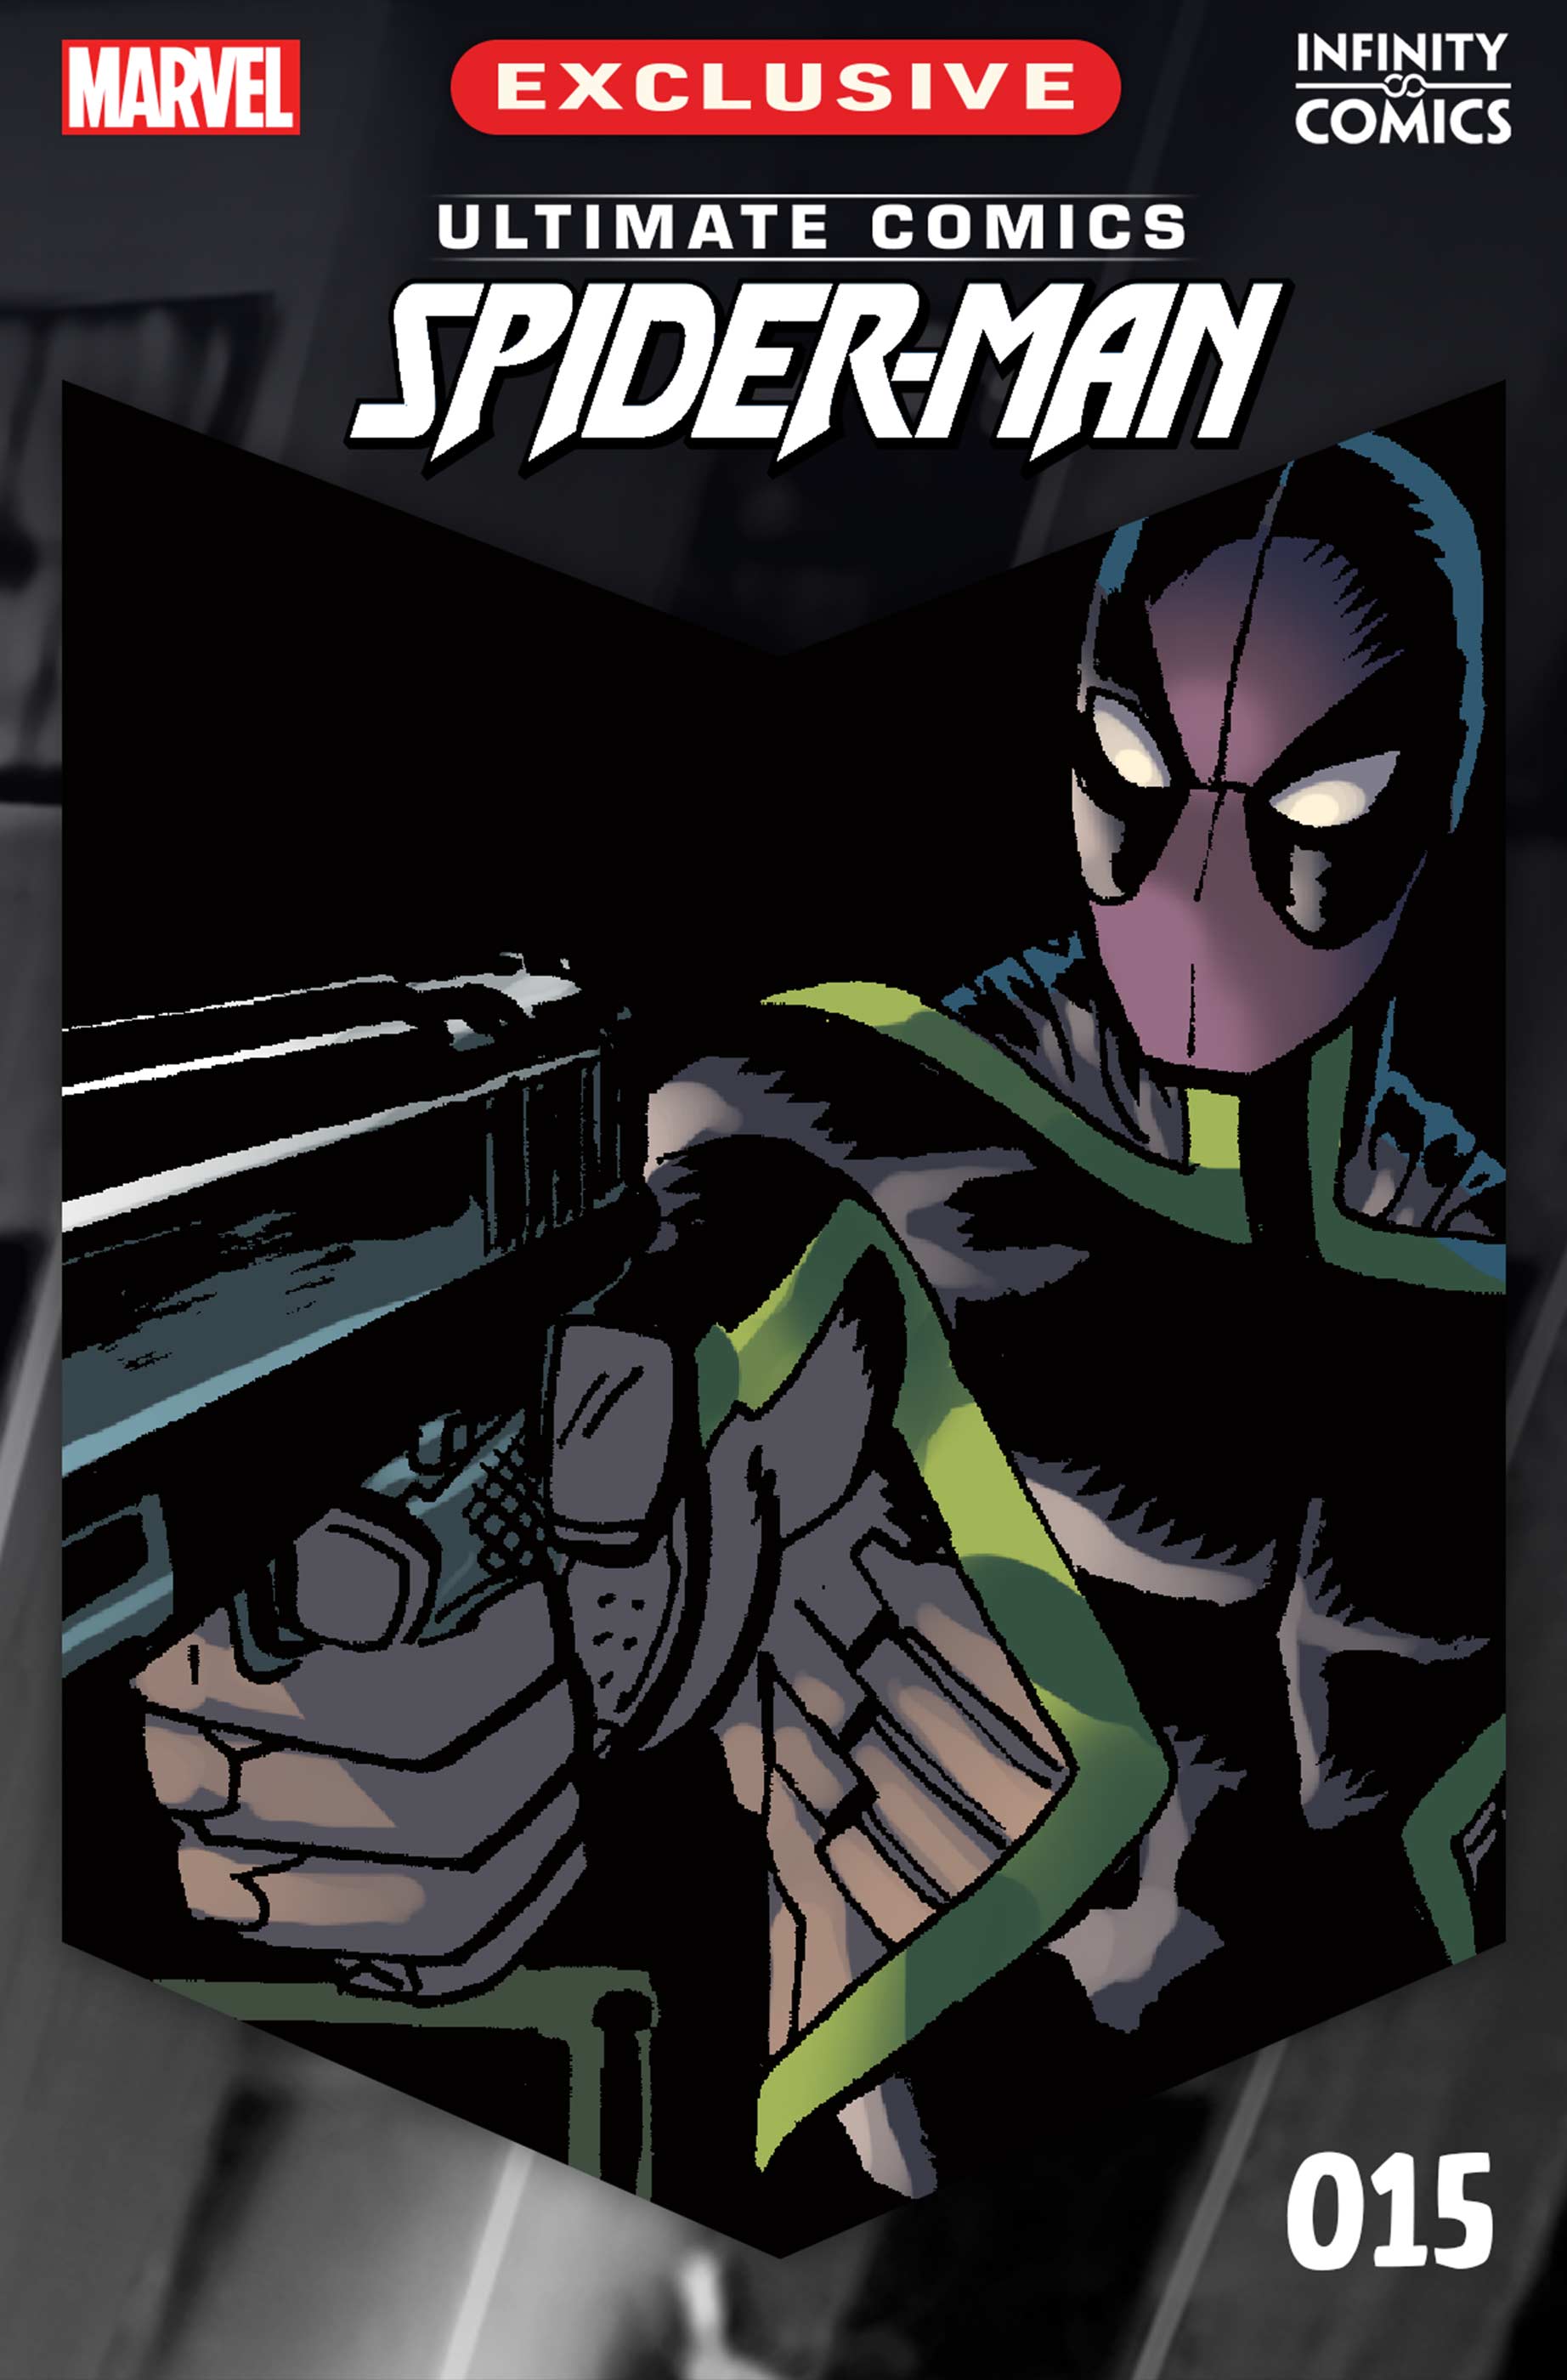 Miles Morales: Spider-Man Infinity Comic (2023) #15